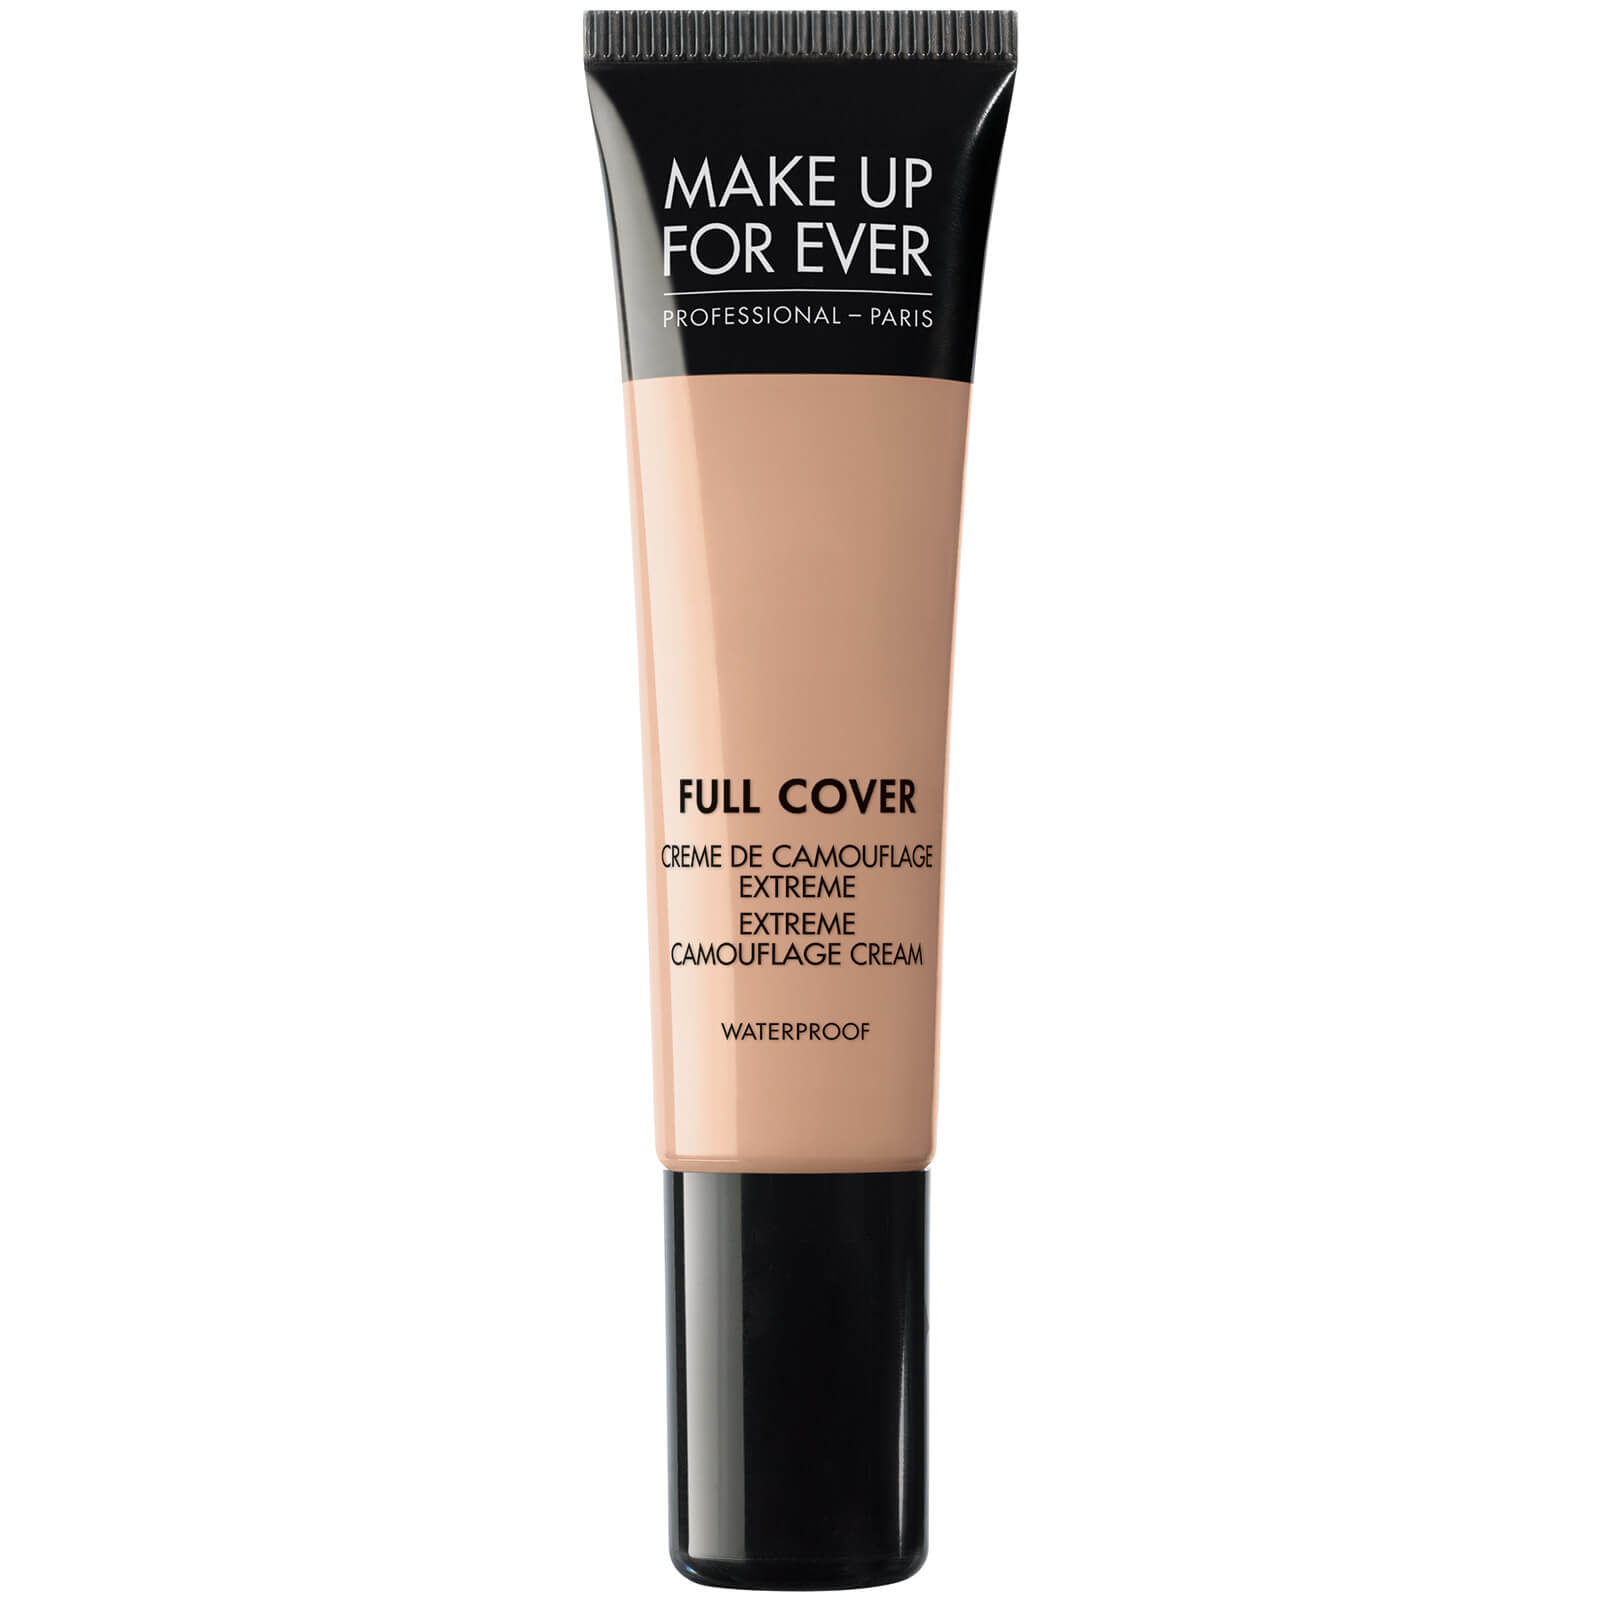 MAKE UP FOR EVER full Cover Concealer 15ml (Various Shades) - - 3-Light Beige